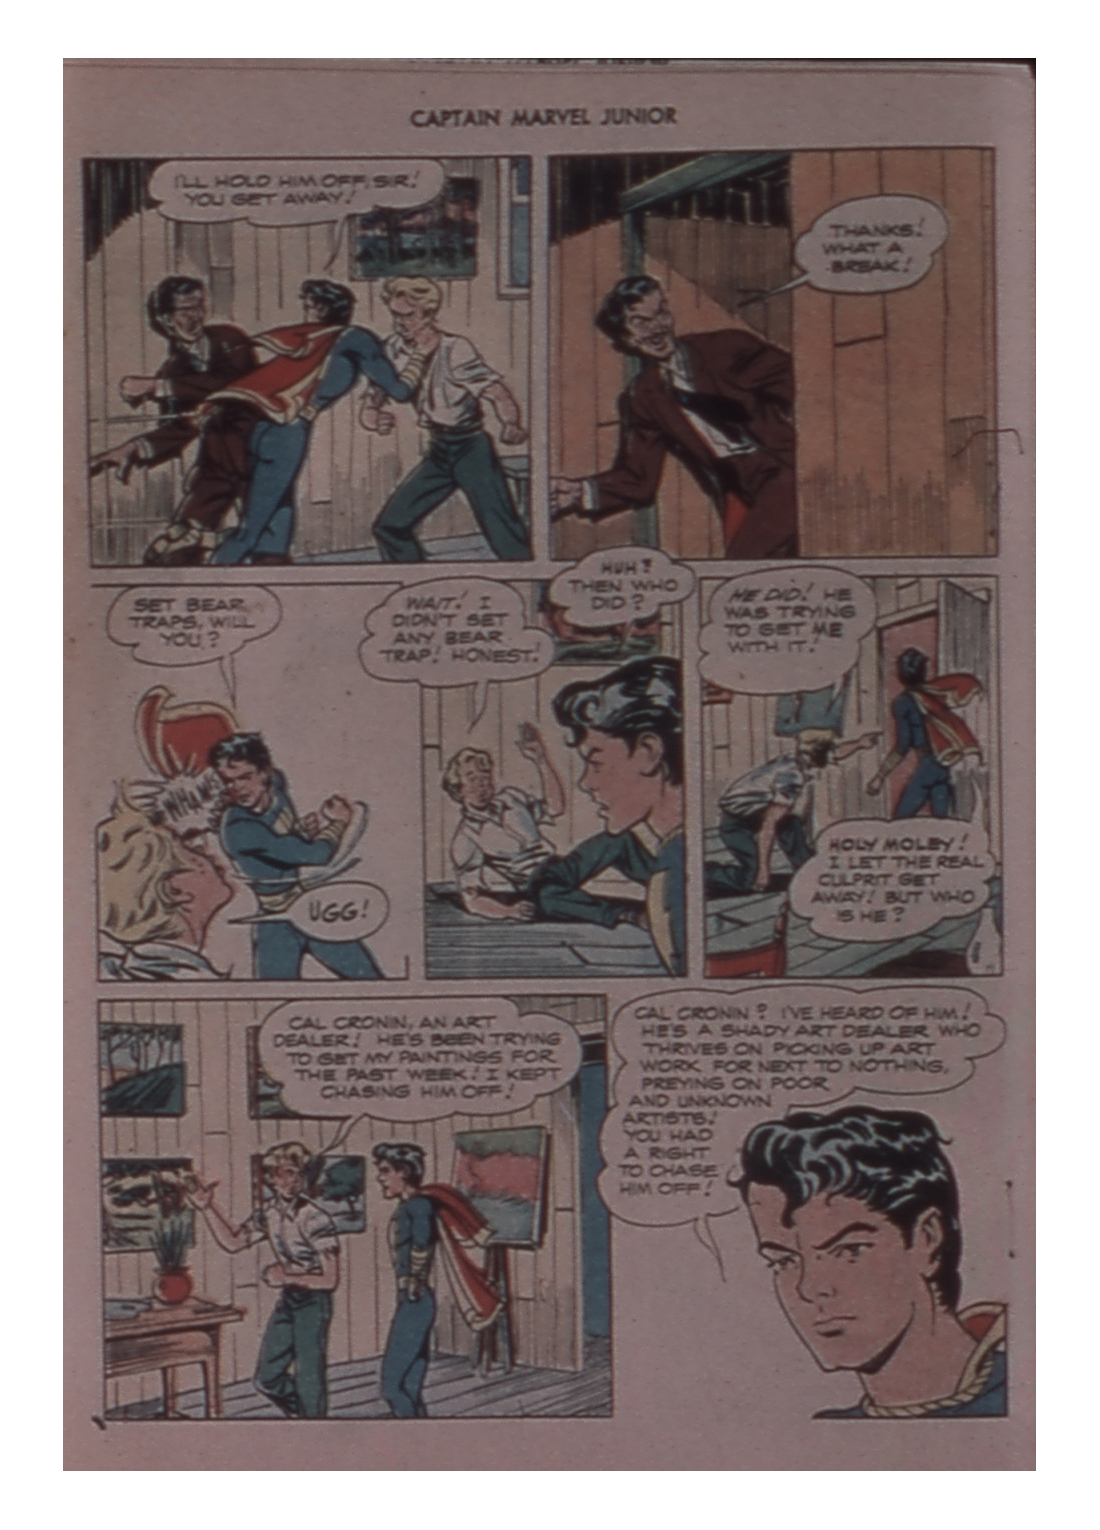 Read online Captain Marvel, Jr. comic -  Issue #59 - 44